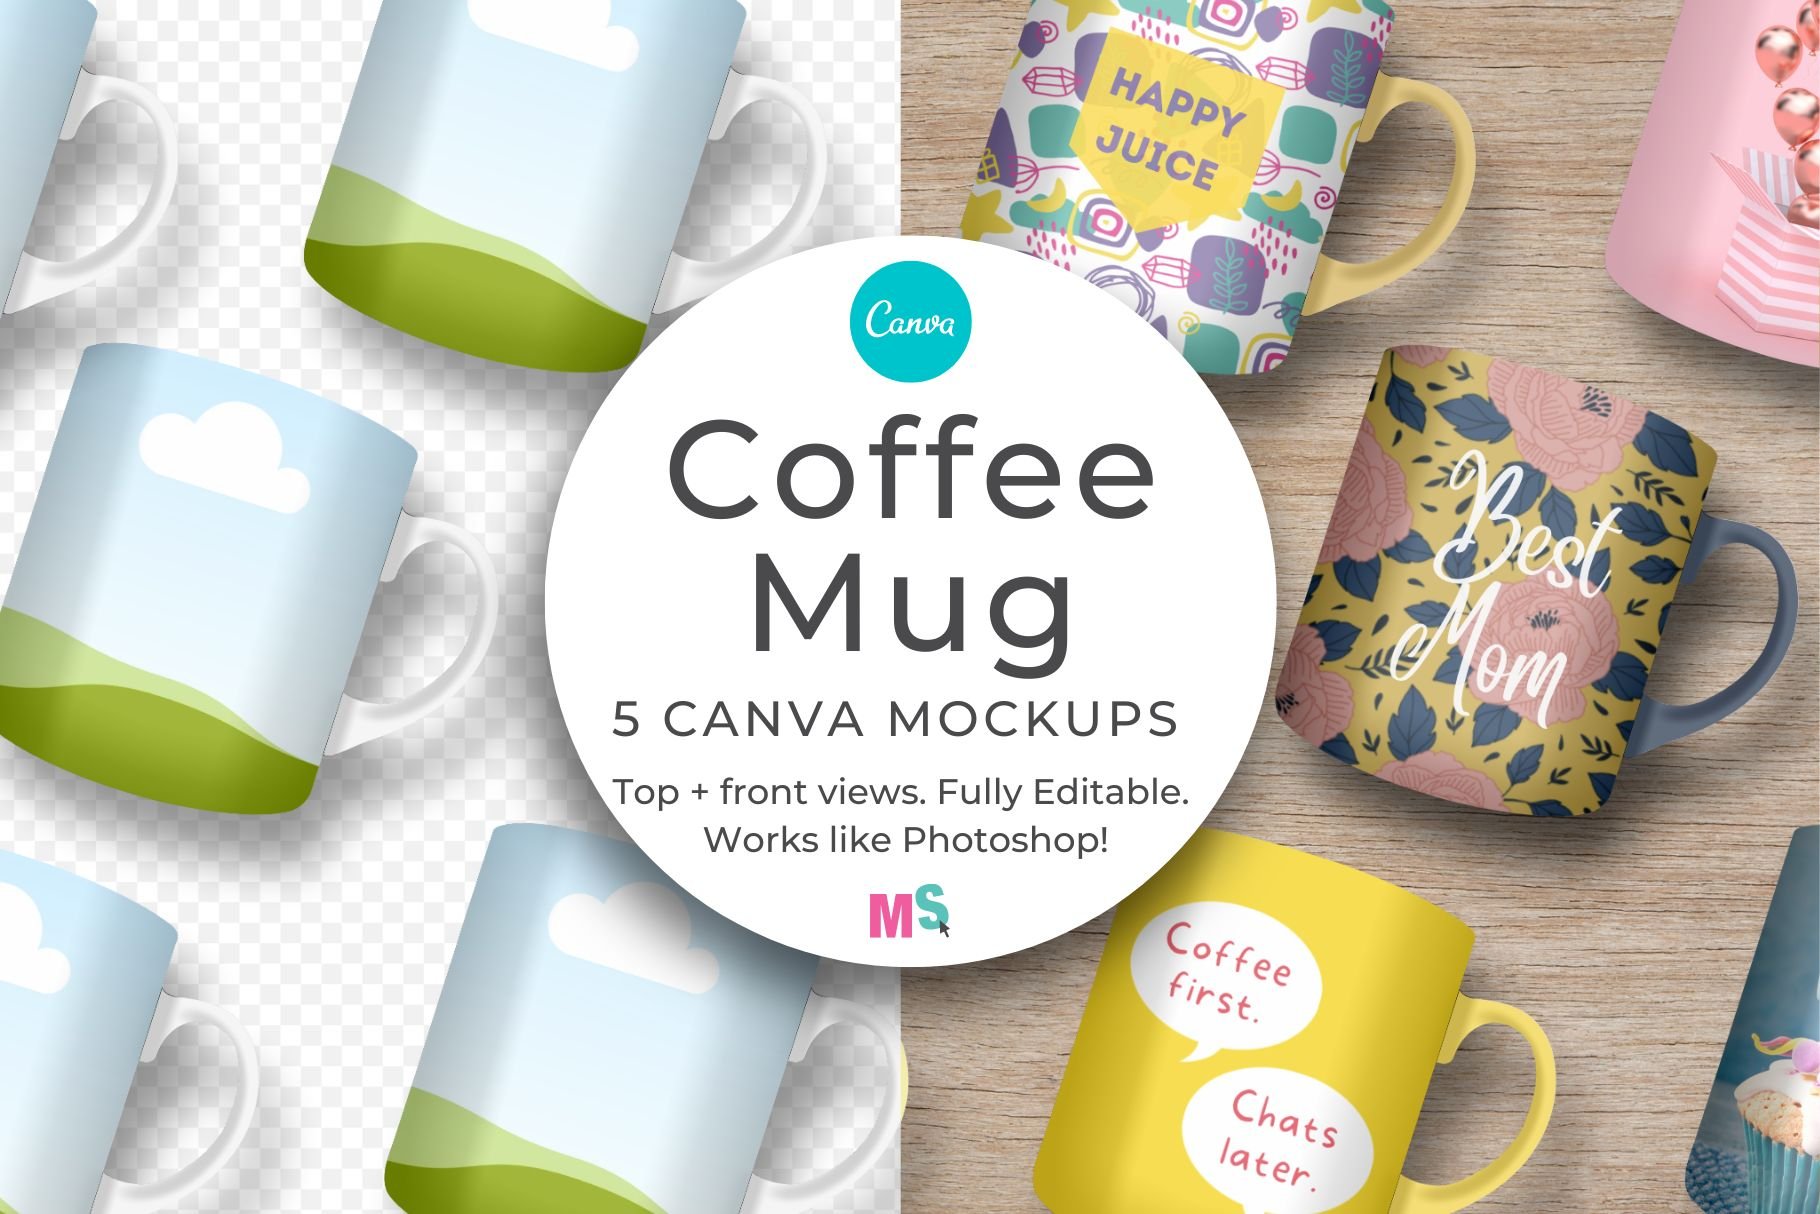 Ceramic Coffee Mug Mockup for Canva cover image.